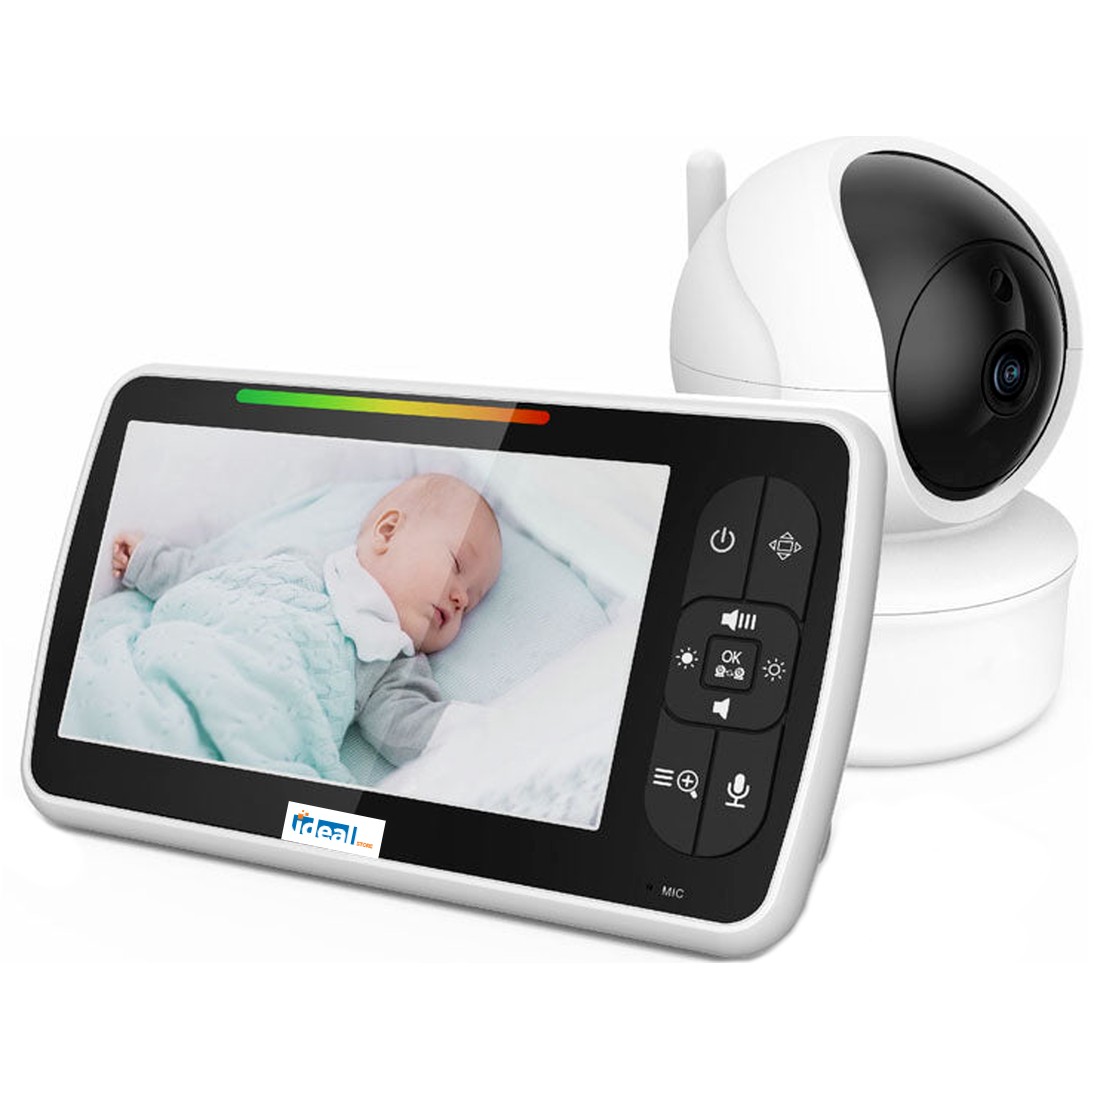 Sistem de Monitorizare Video si Audio Pentru Bebelusi Baby Angel idealStore, Ecran LCD Color 5 inch, Vedere Noctura cu Infrarosu, Monitor de Temperatura, Posibilitate de Interactiune cu Bebelusul, Cantece de Leagan, Wireless, Momento